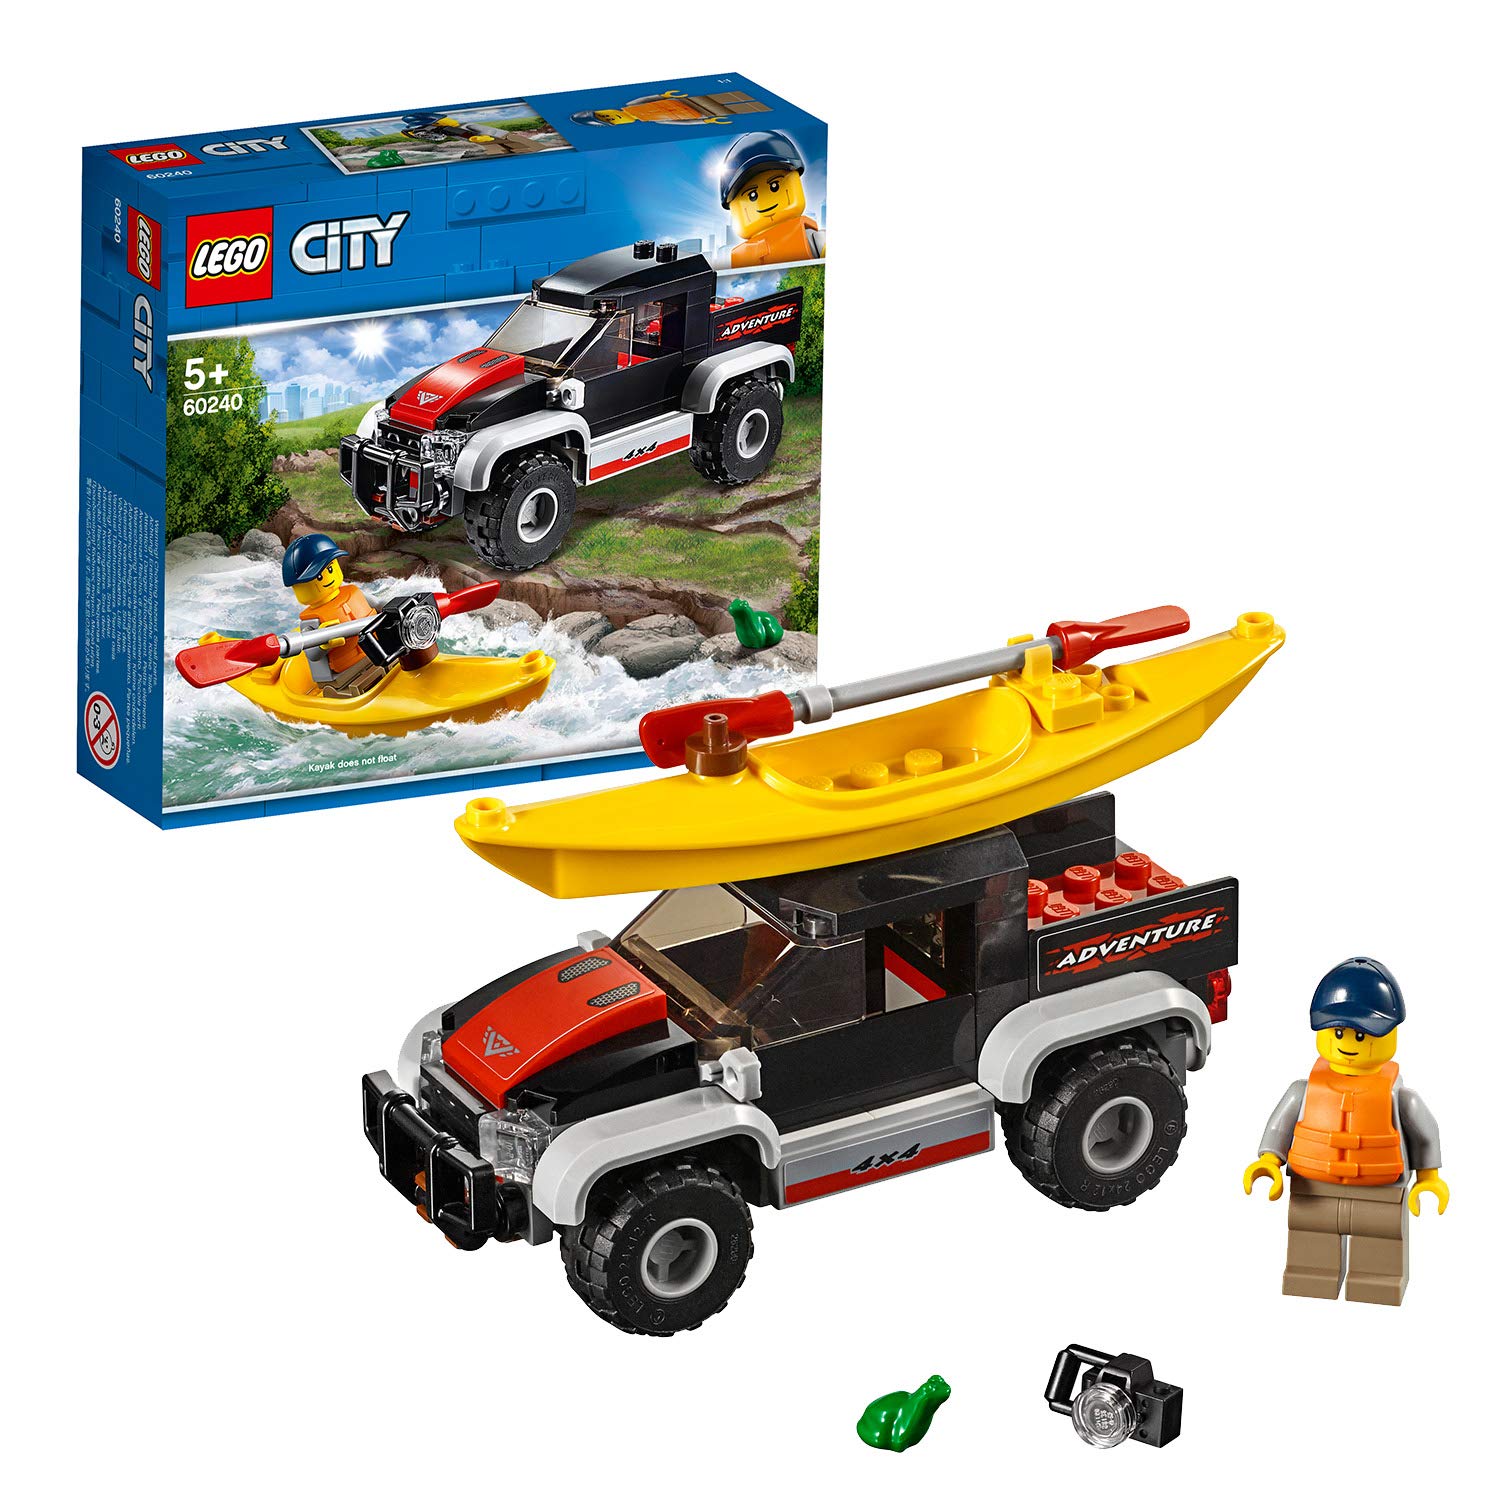 Lego City 60240 Kayak Adventure